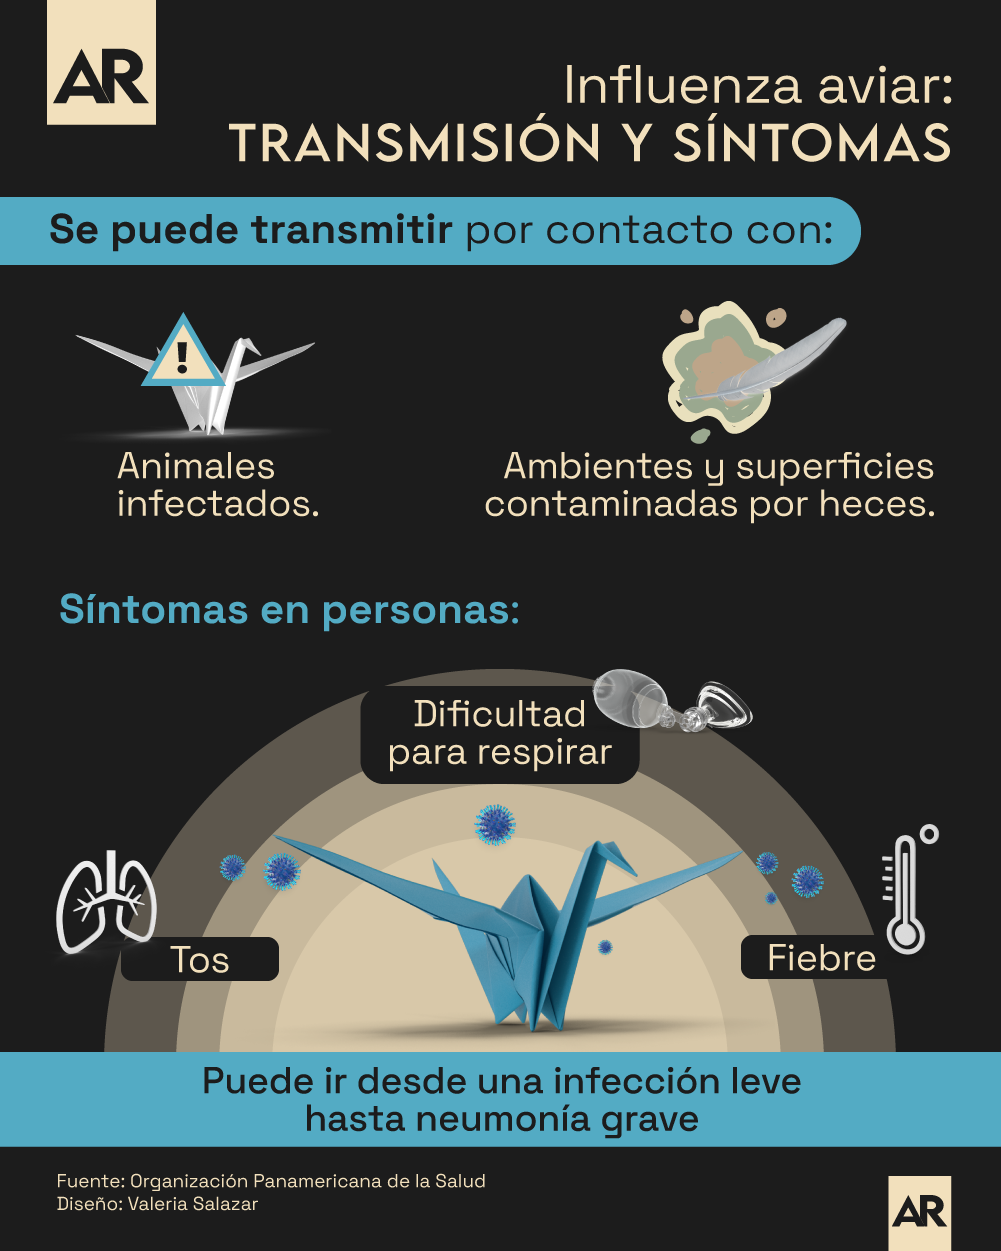 Influenza aviar: transmision y sintomas